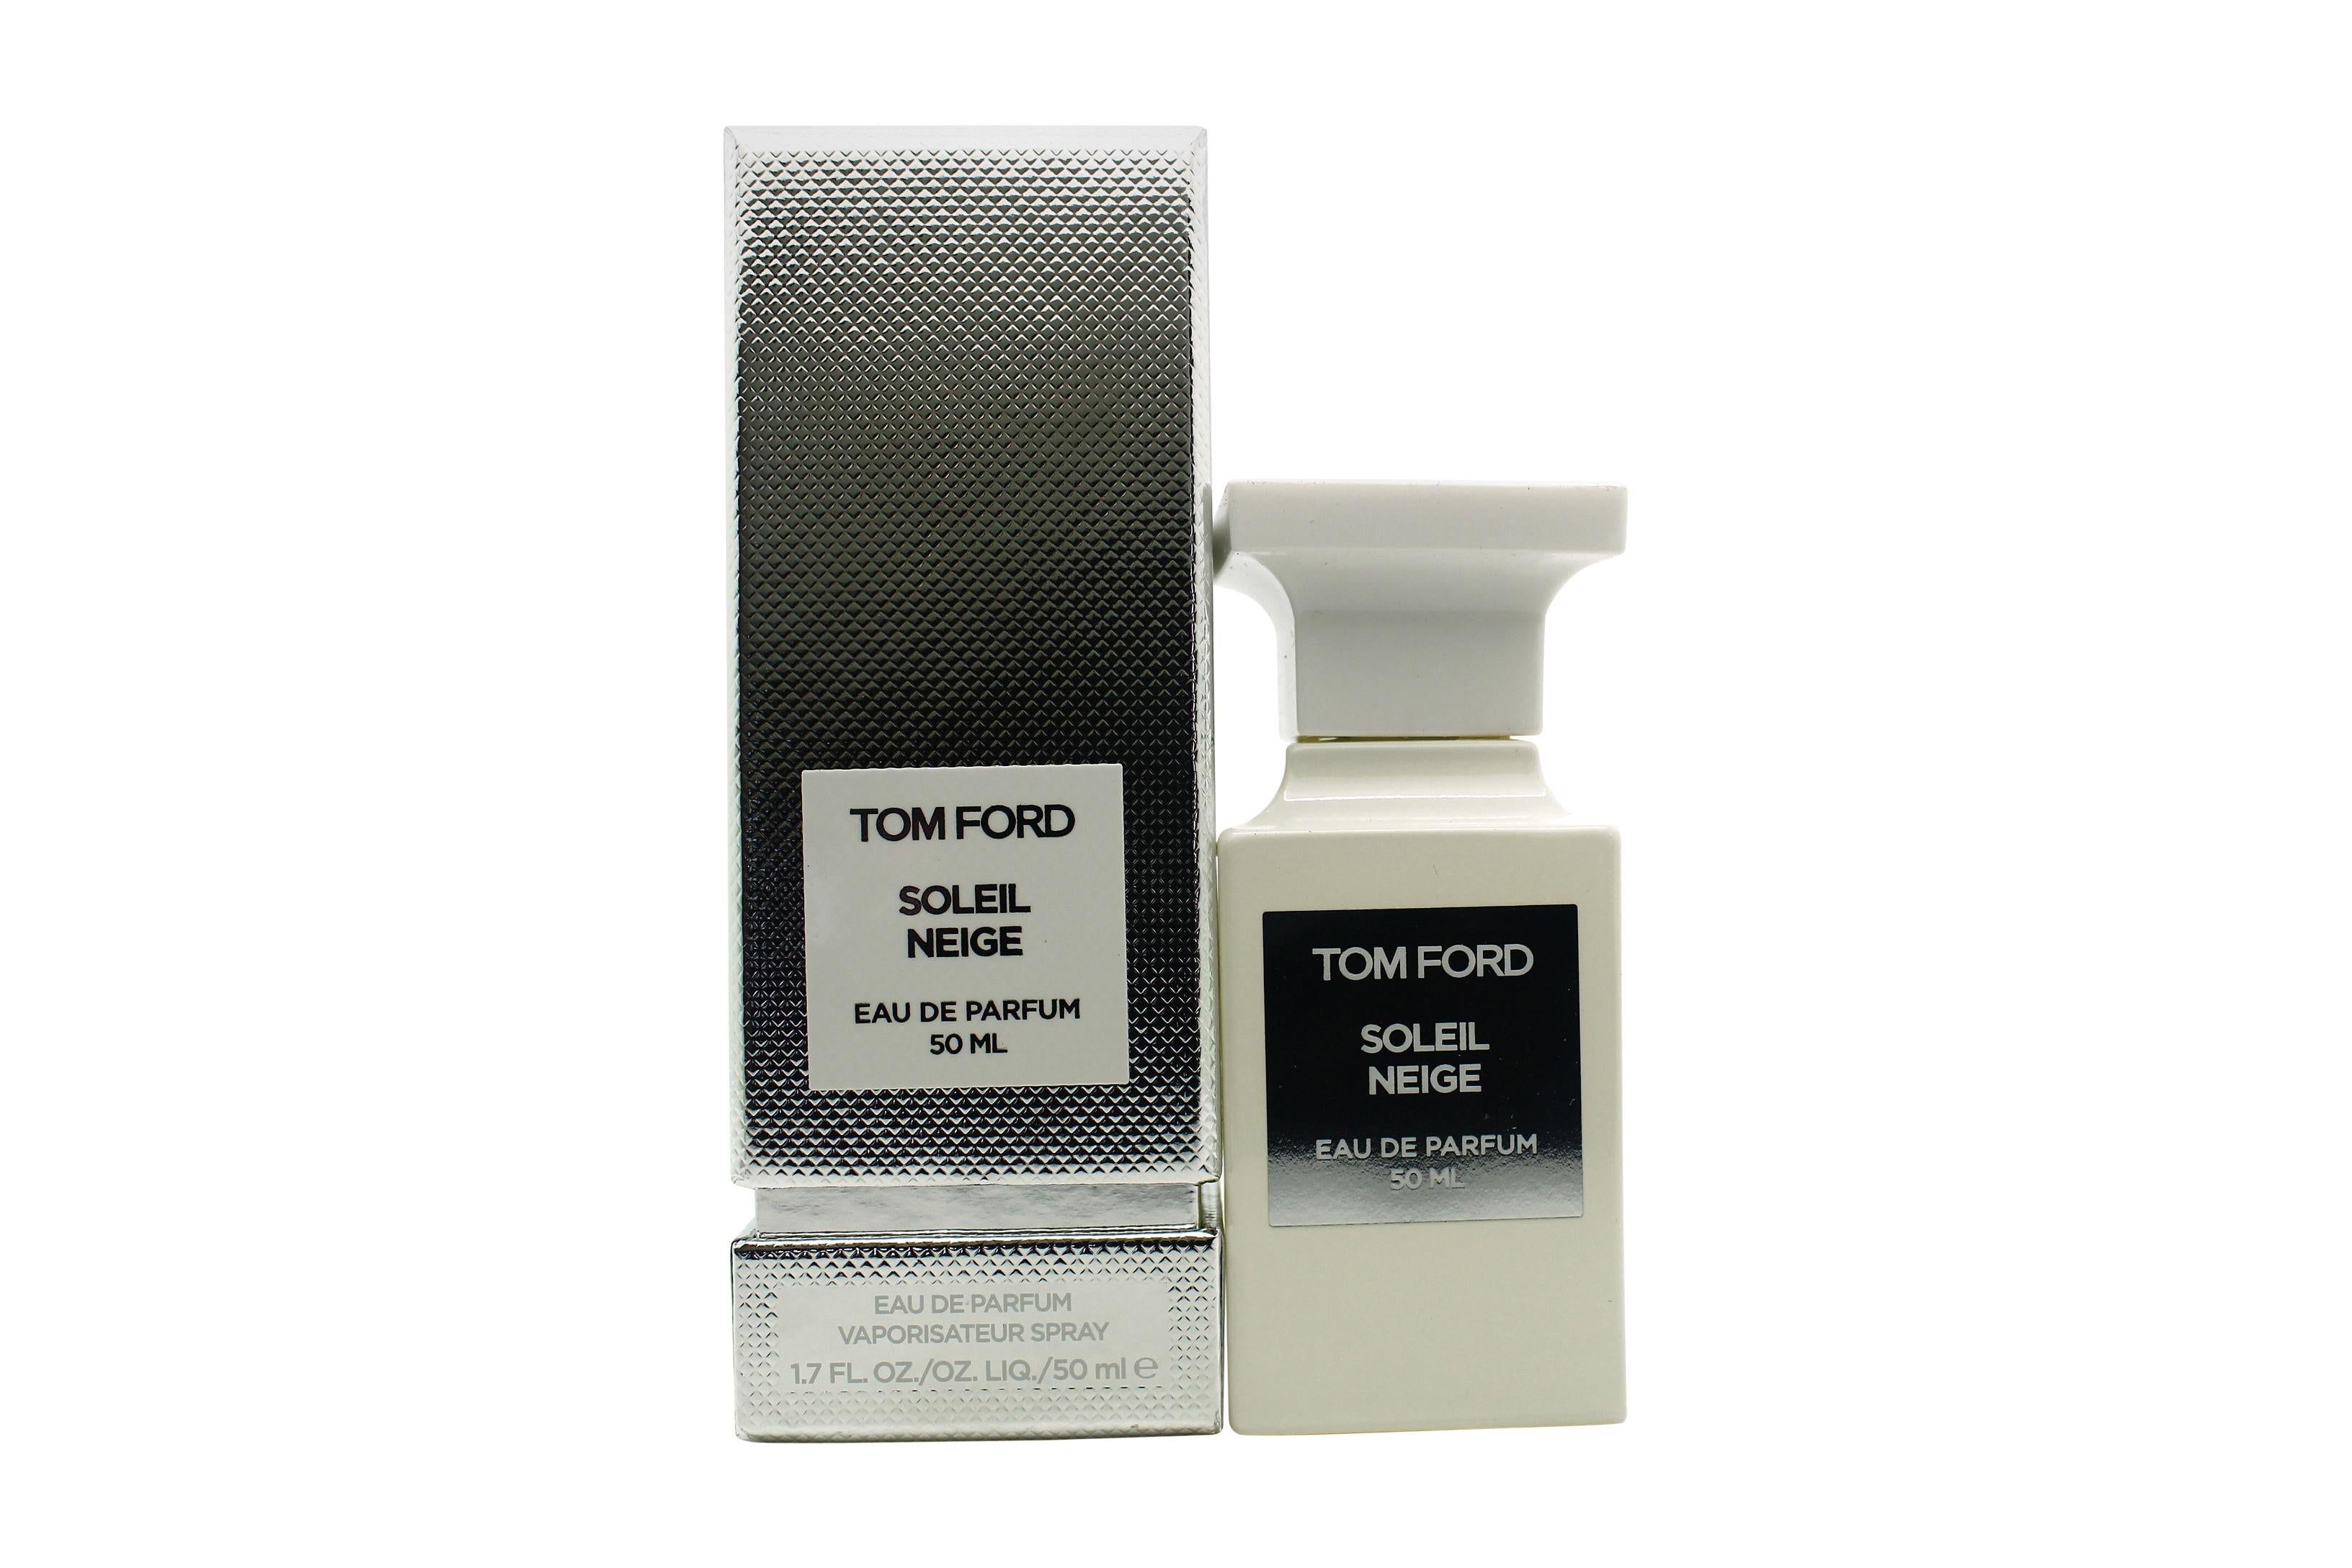 View Tom Ford Soleil Neige Eau de Parfum 50ml Spray information